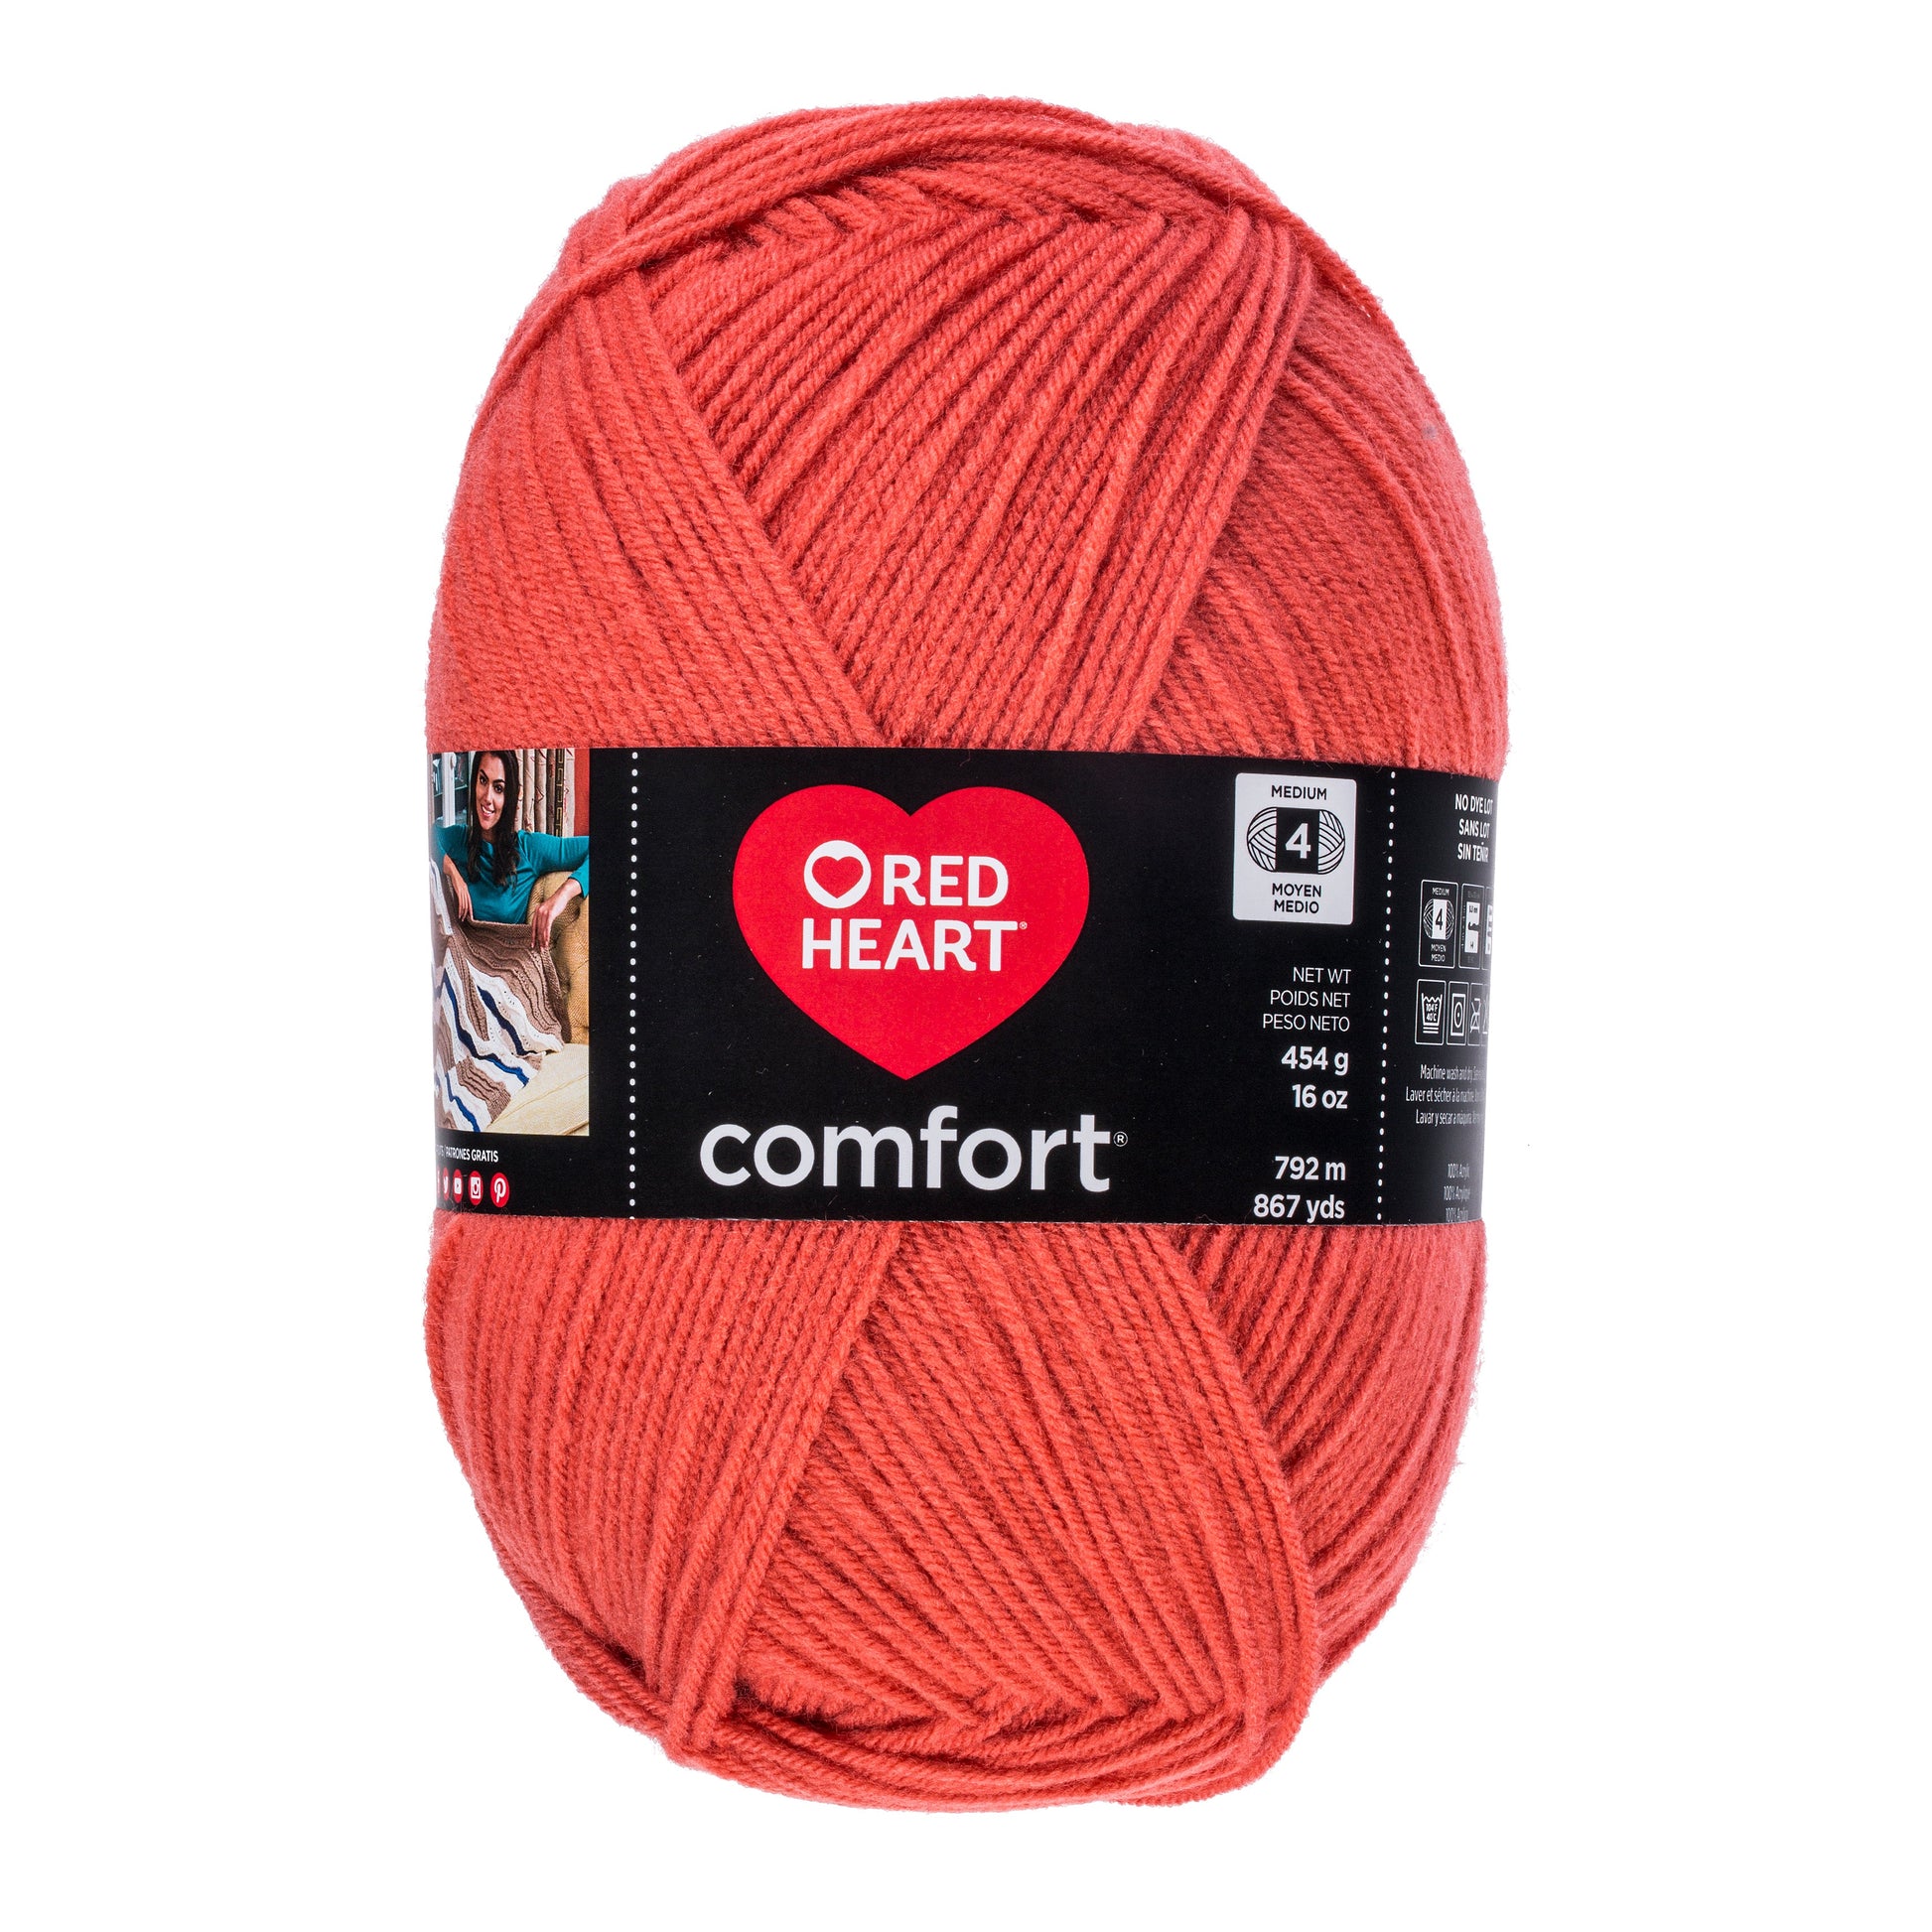 Red Heart Comfort Yarn - Clearance Shades